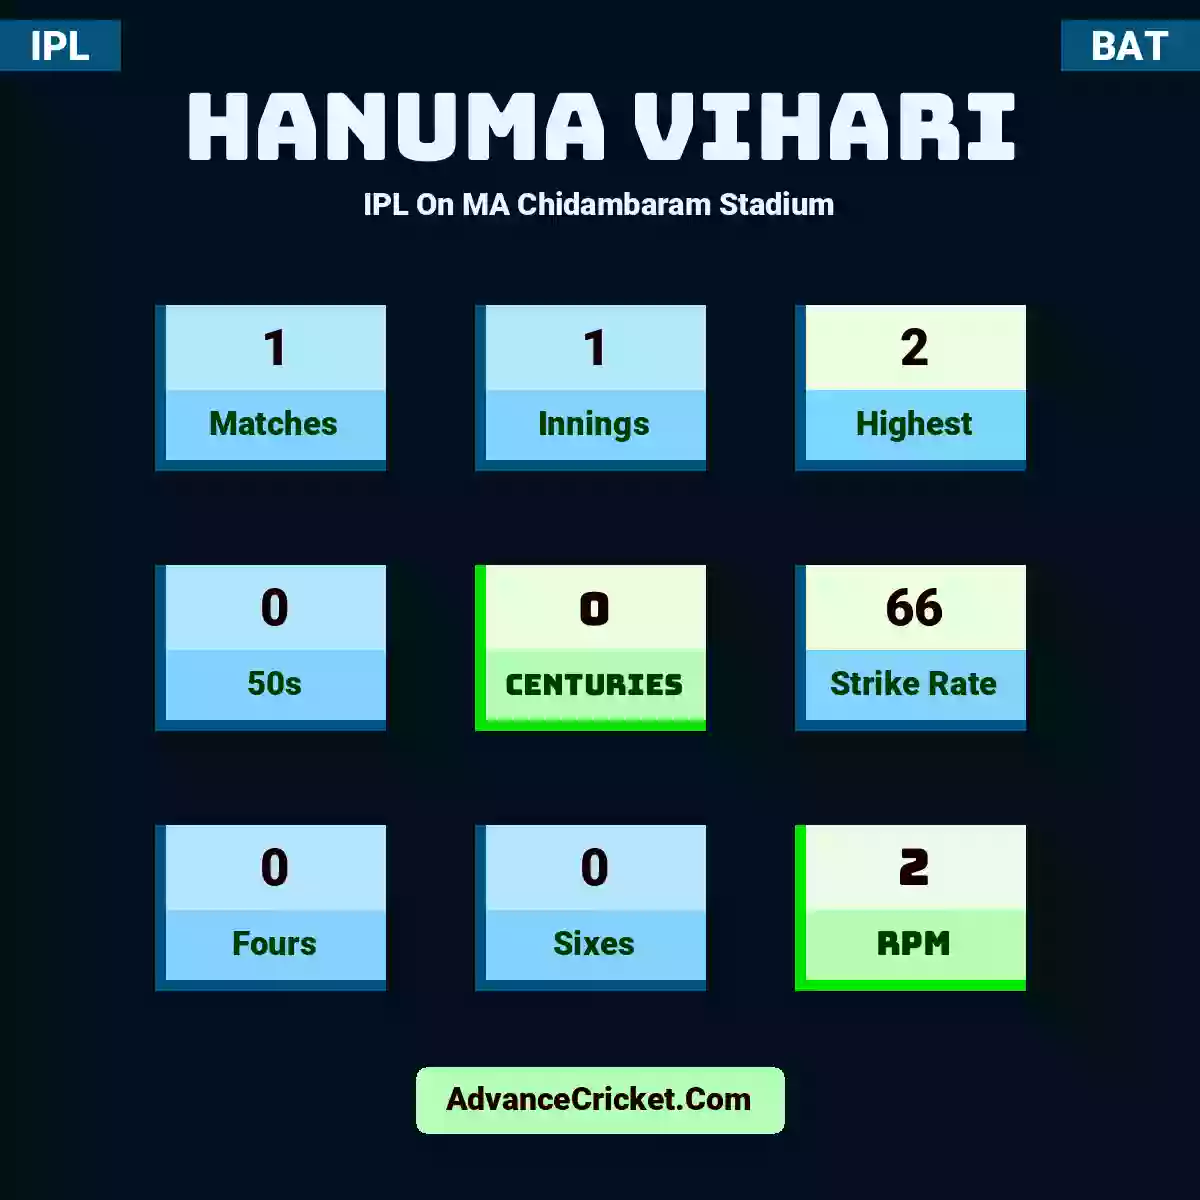 Hanuma Vihari IPL  On MA Chidambaram Stadium, Hanuma Vihari played 1 matches, scored 2 runs as highest, 0 half-centuries, and 0 centuries, with a strike rate of 66. H.Vihari hit 0 fours and 0 sixes, with an RPM of 2.